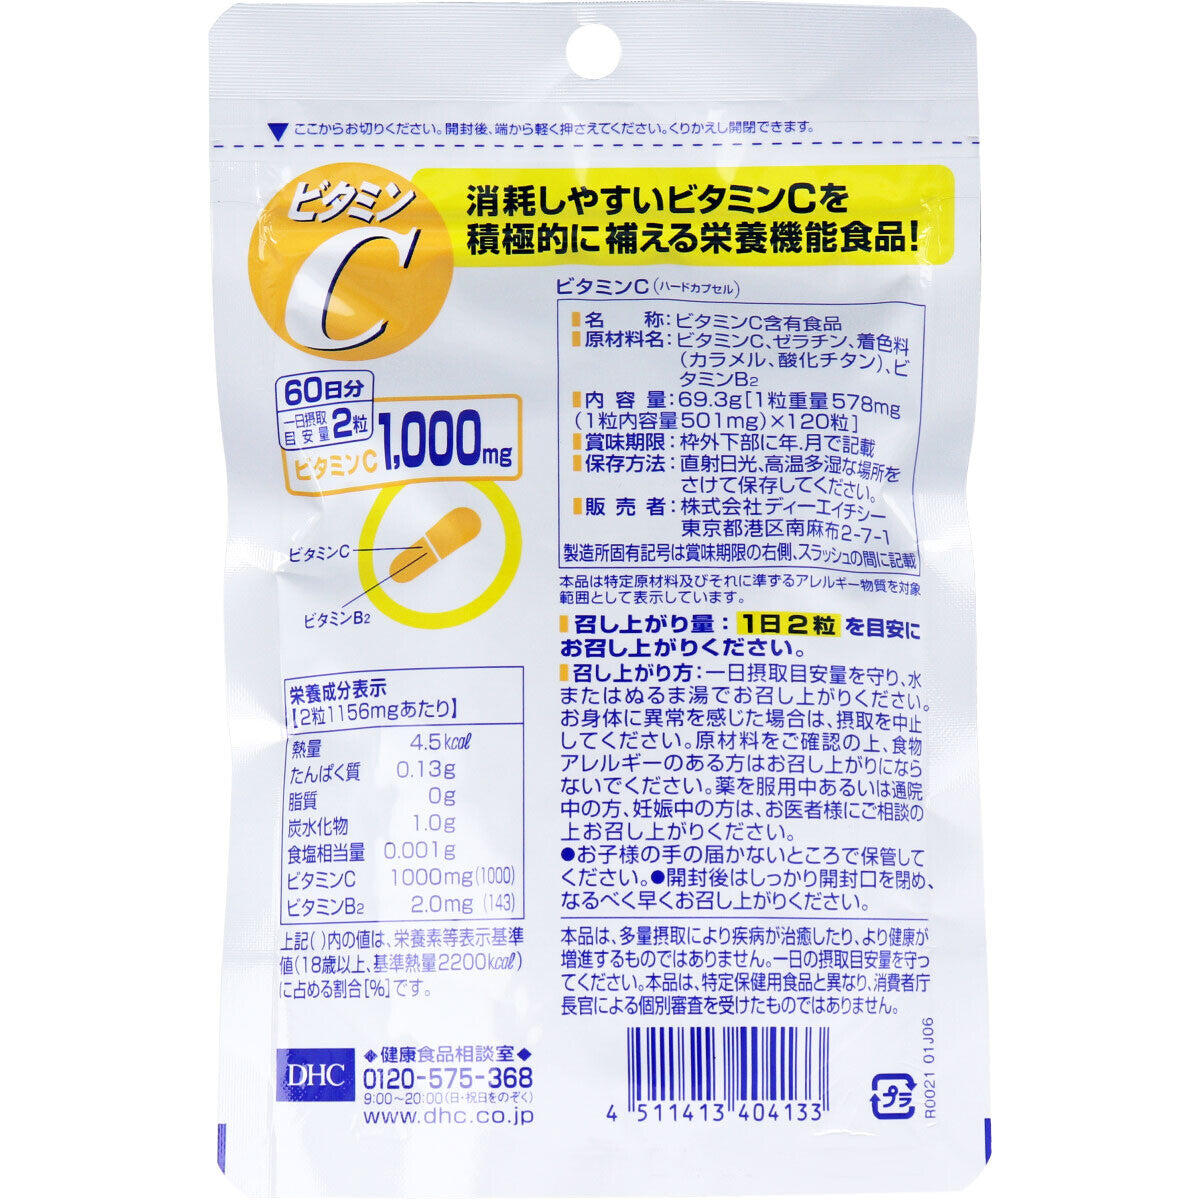 DHC Vitamin C - (60 วัน) วิตามินซี  เพื่อผิวขาวใส และบำรุงร่างกาย  (120แคปซูล)